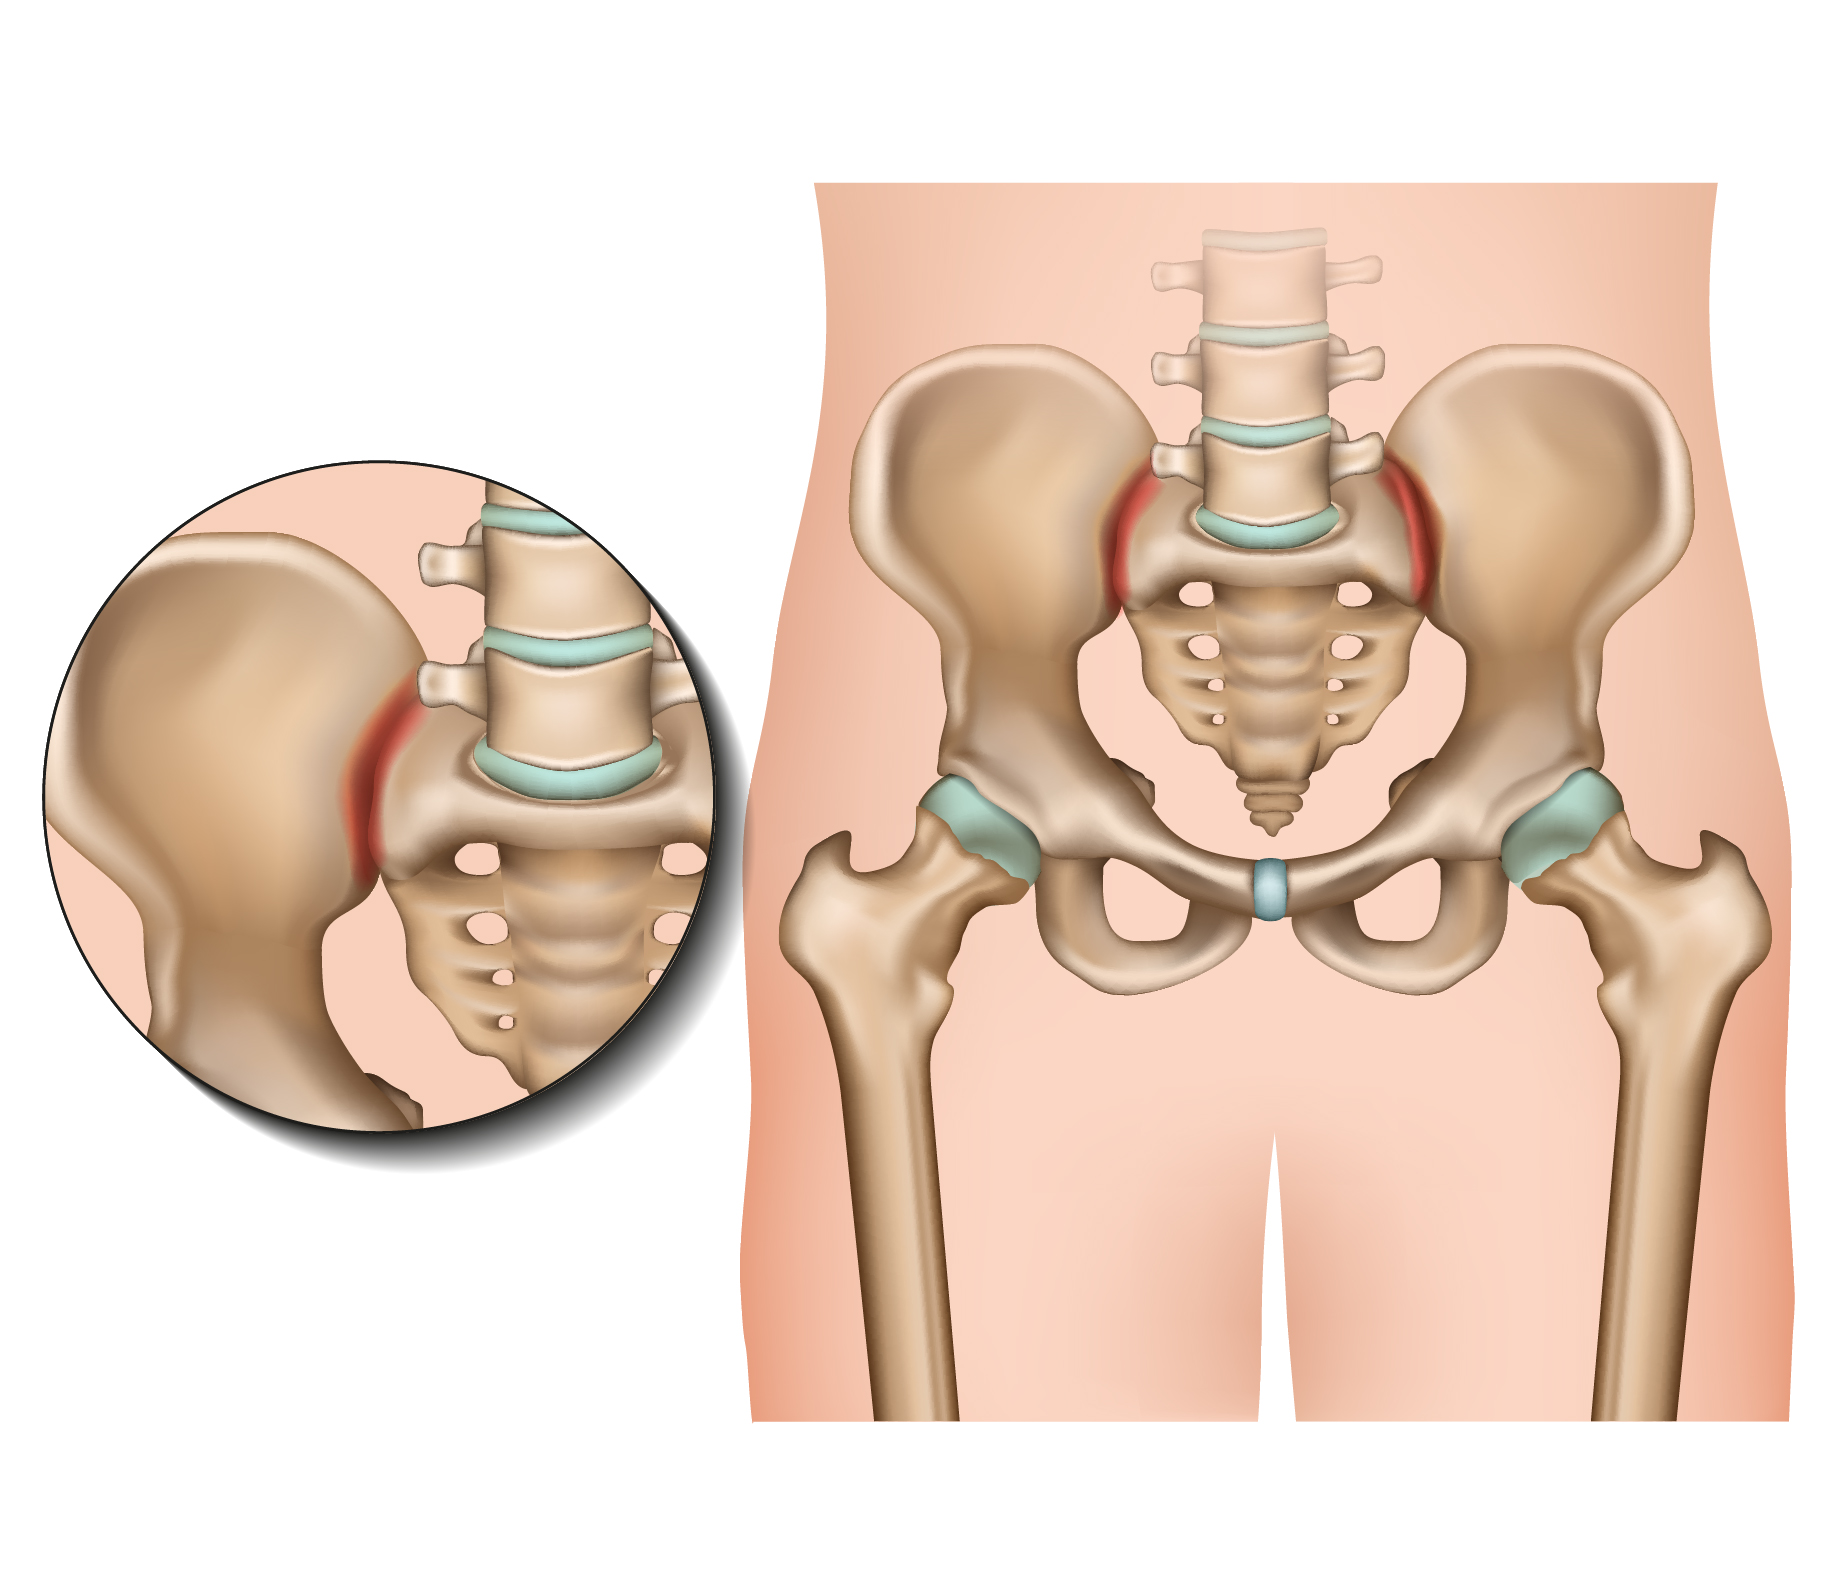 Pelvic Girdle Pain: Causes, Symptoms & Treatment at QI Spine